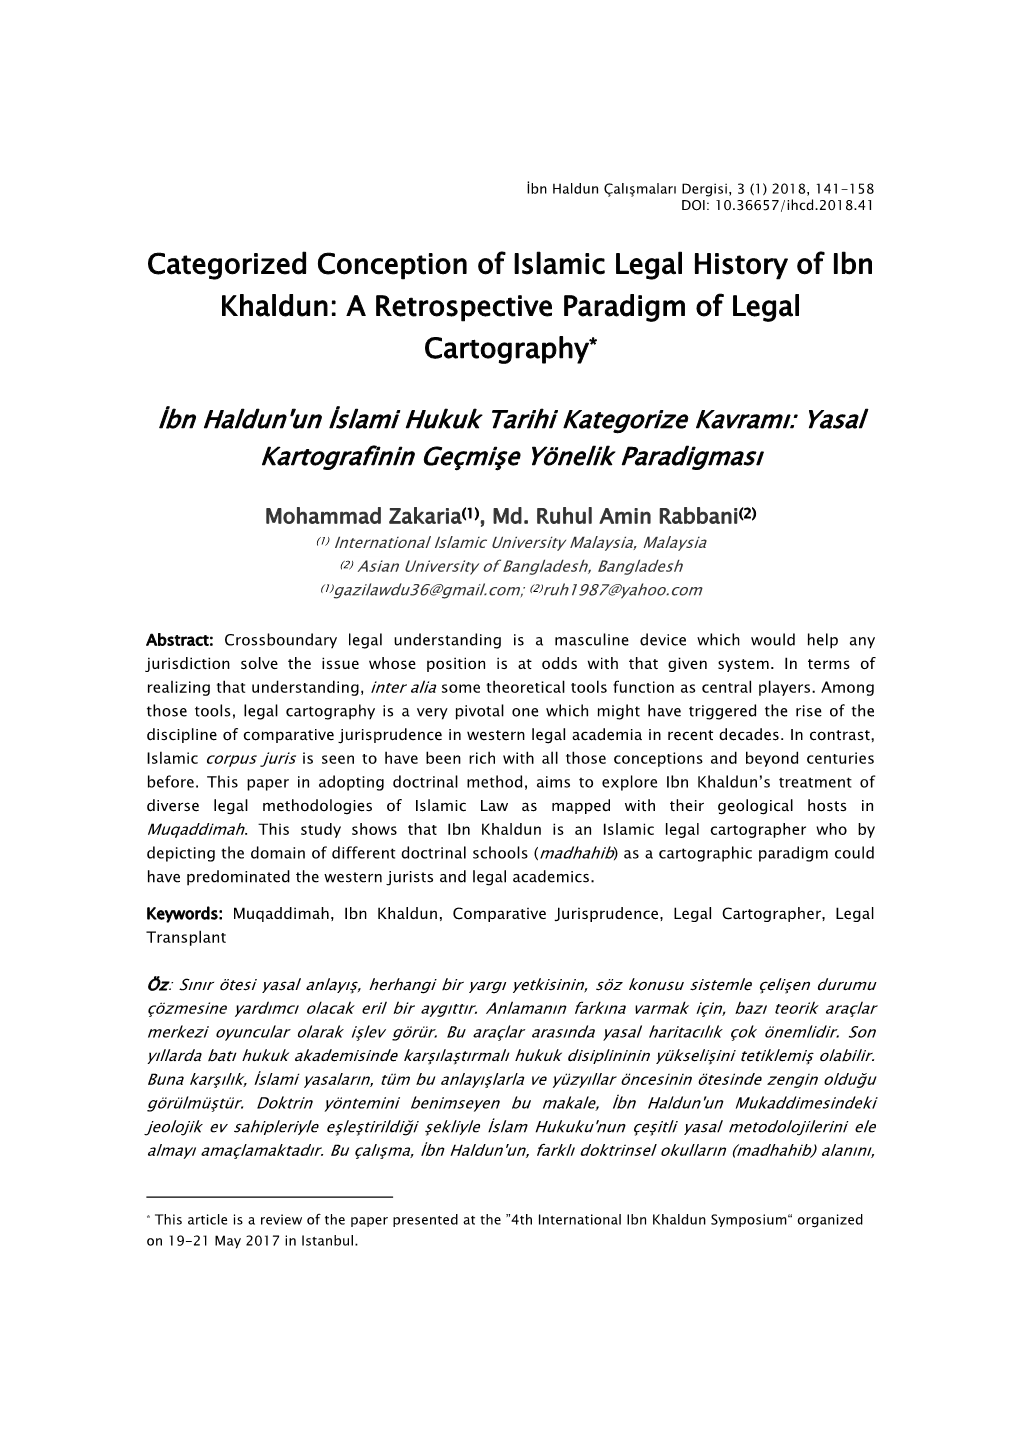 Categorized Conception of Islamic Legal History of Ibn Khaldun: a Retrospective Paradigm of Legal Cartography*